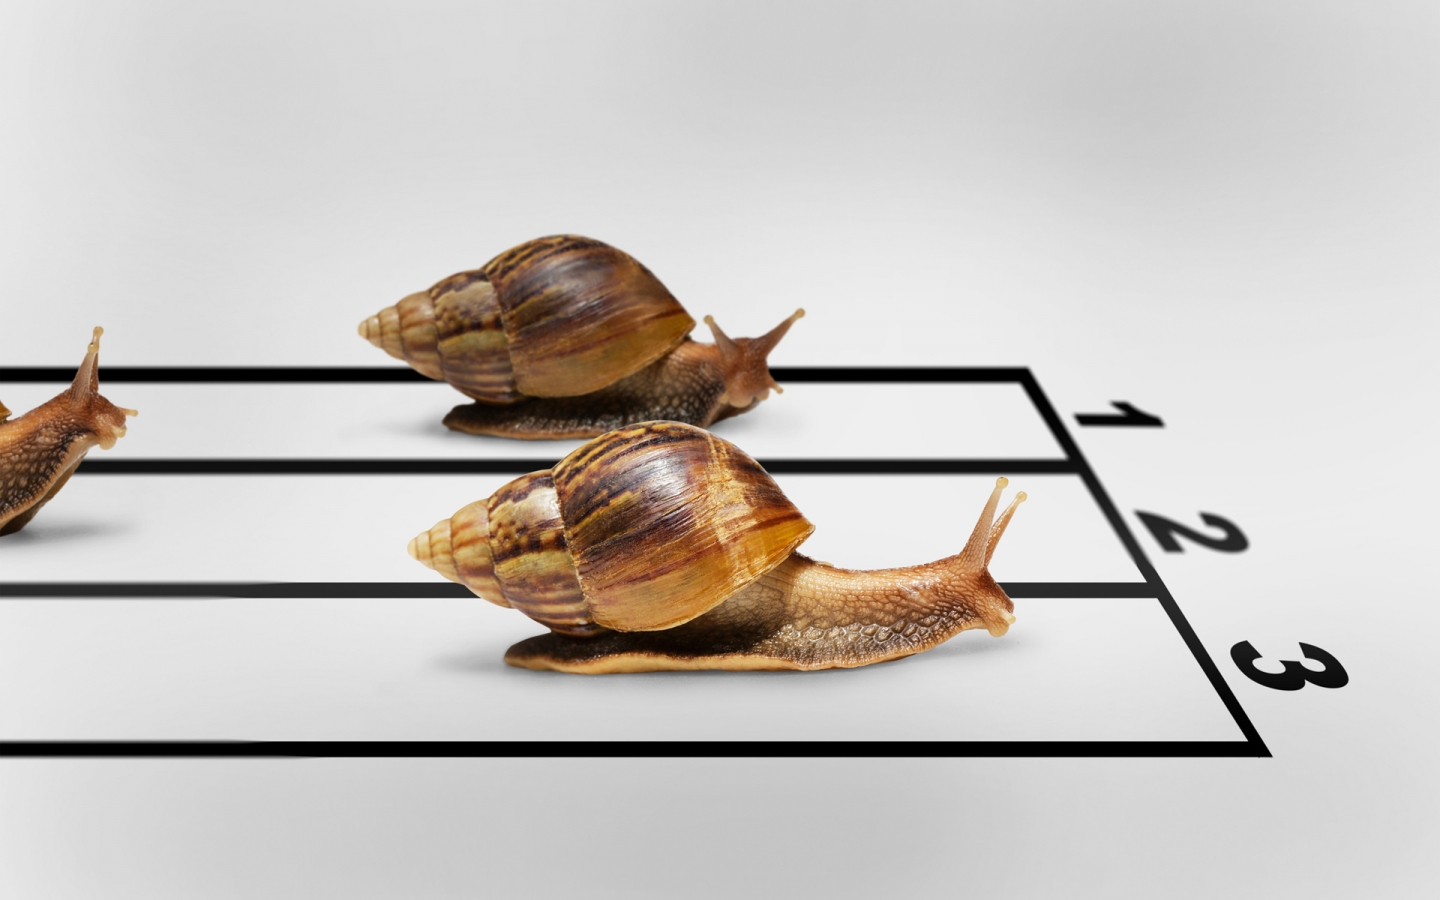 Snail Race for 1440 x 900 widescreen resolution